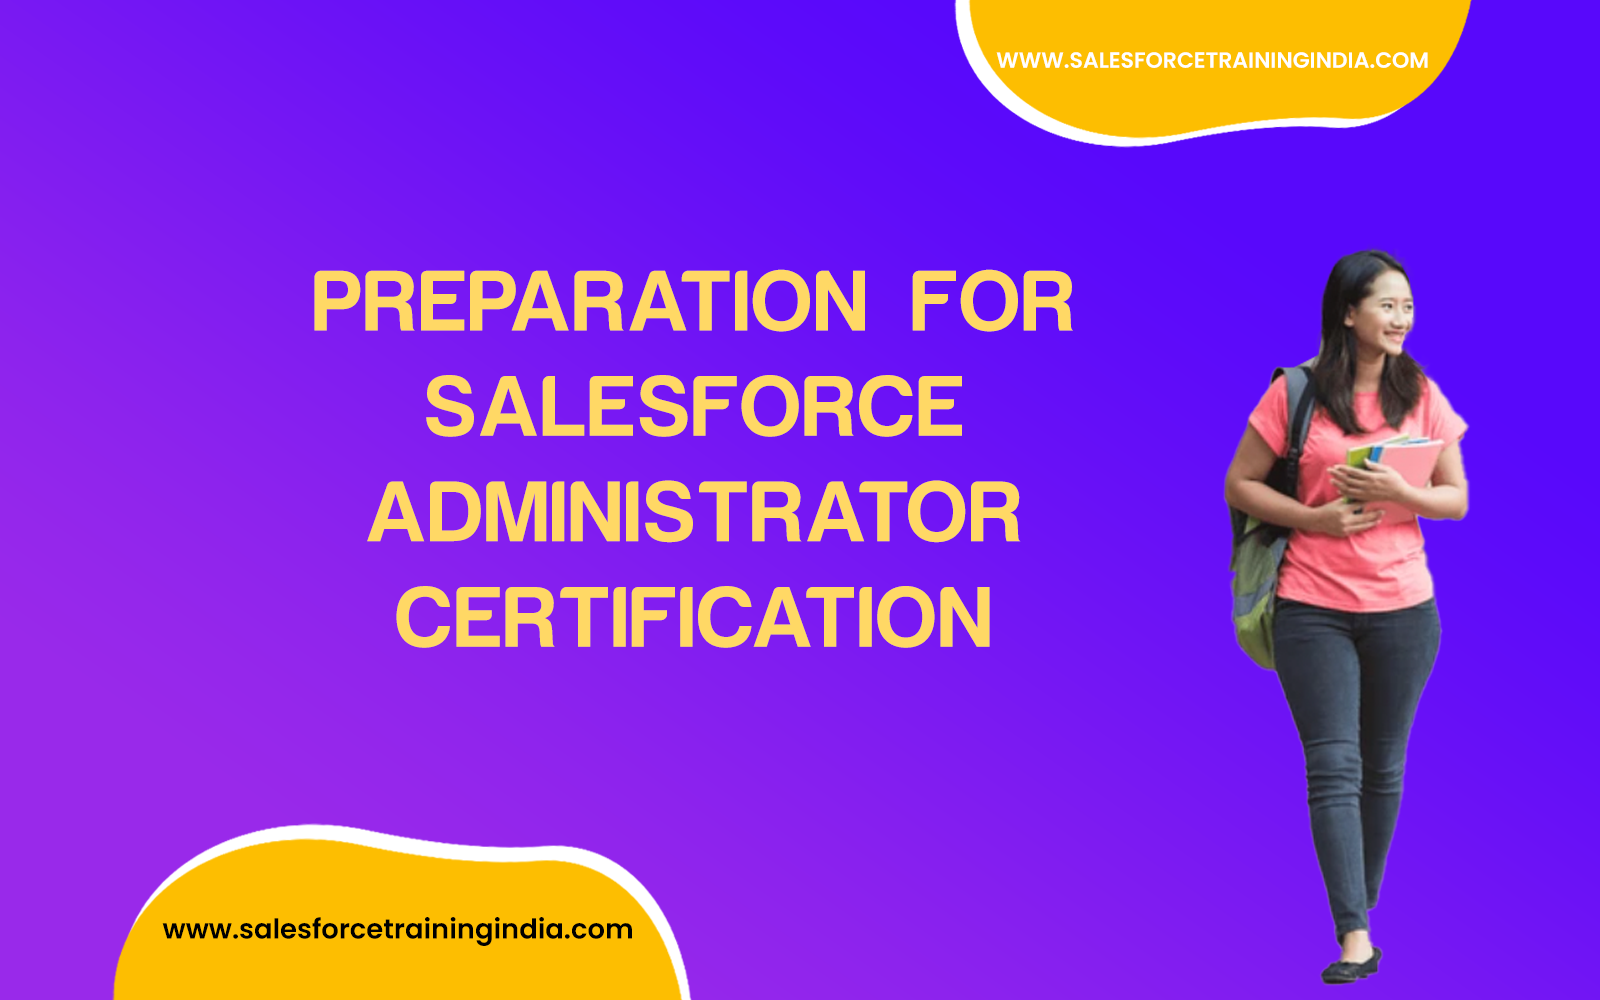 Preparation for Salesforce Administrator Certification